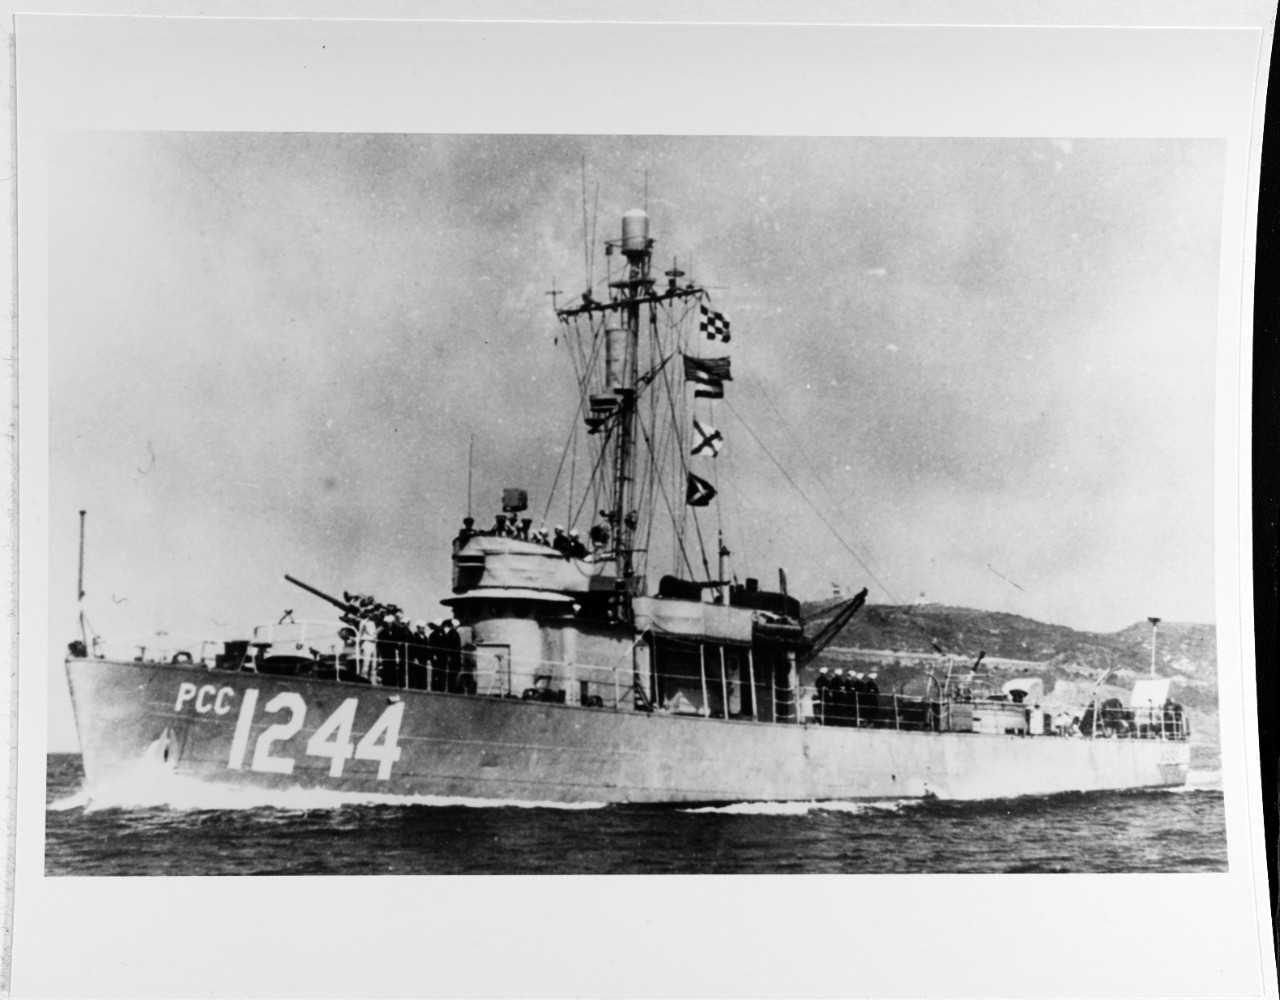 USS PCC-1244, later MARTINEZ